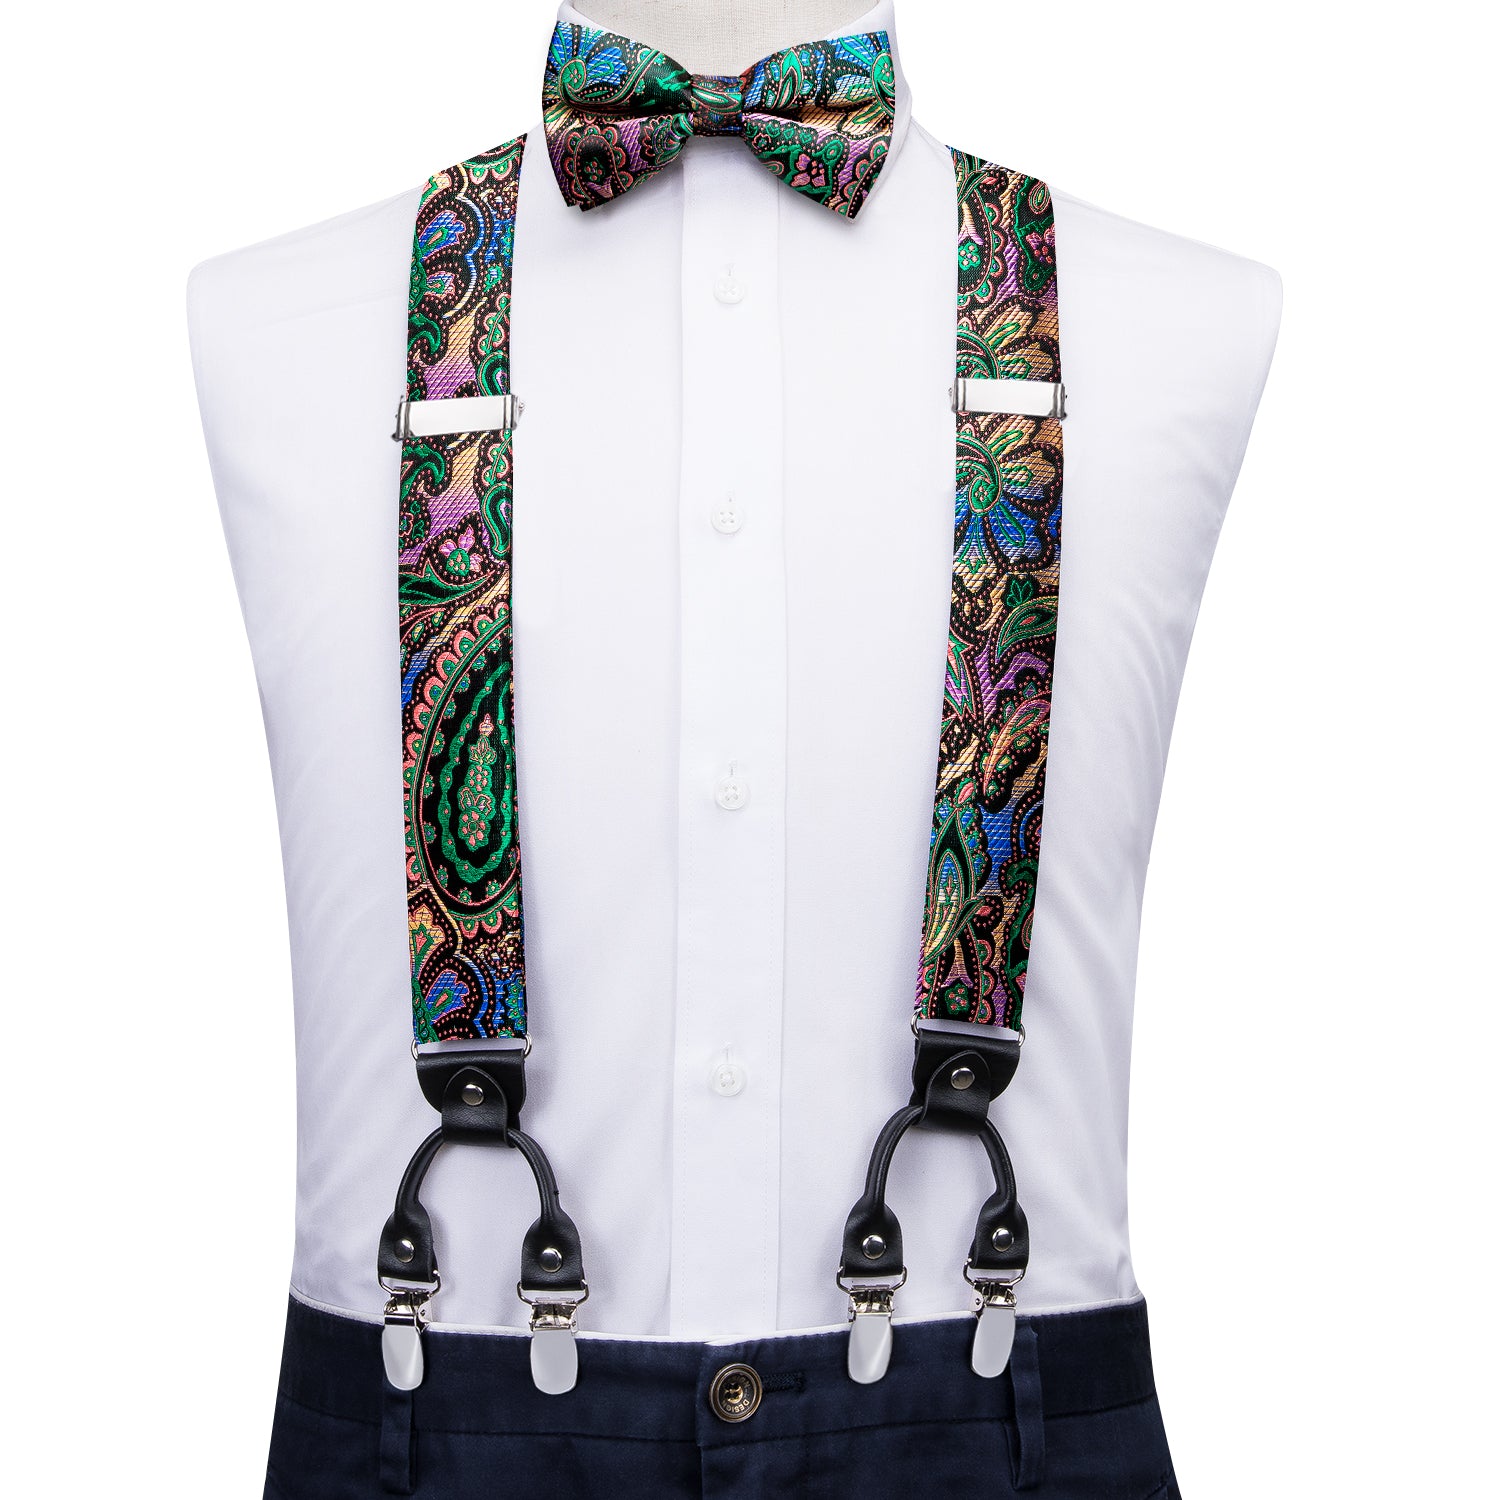 New Colorful Paisley Men's Suspender Bowtie Pocket Square Cufflinks Set